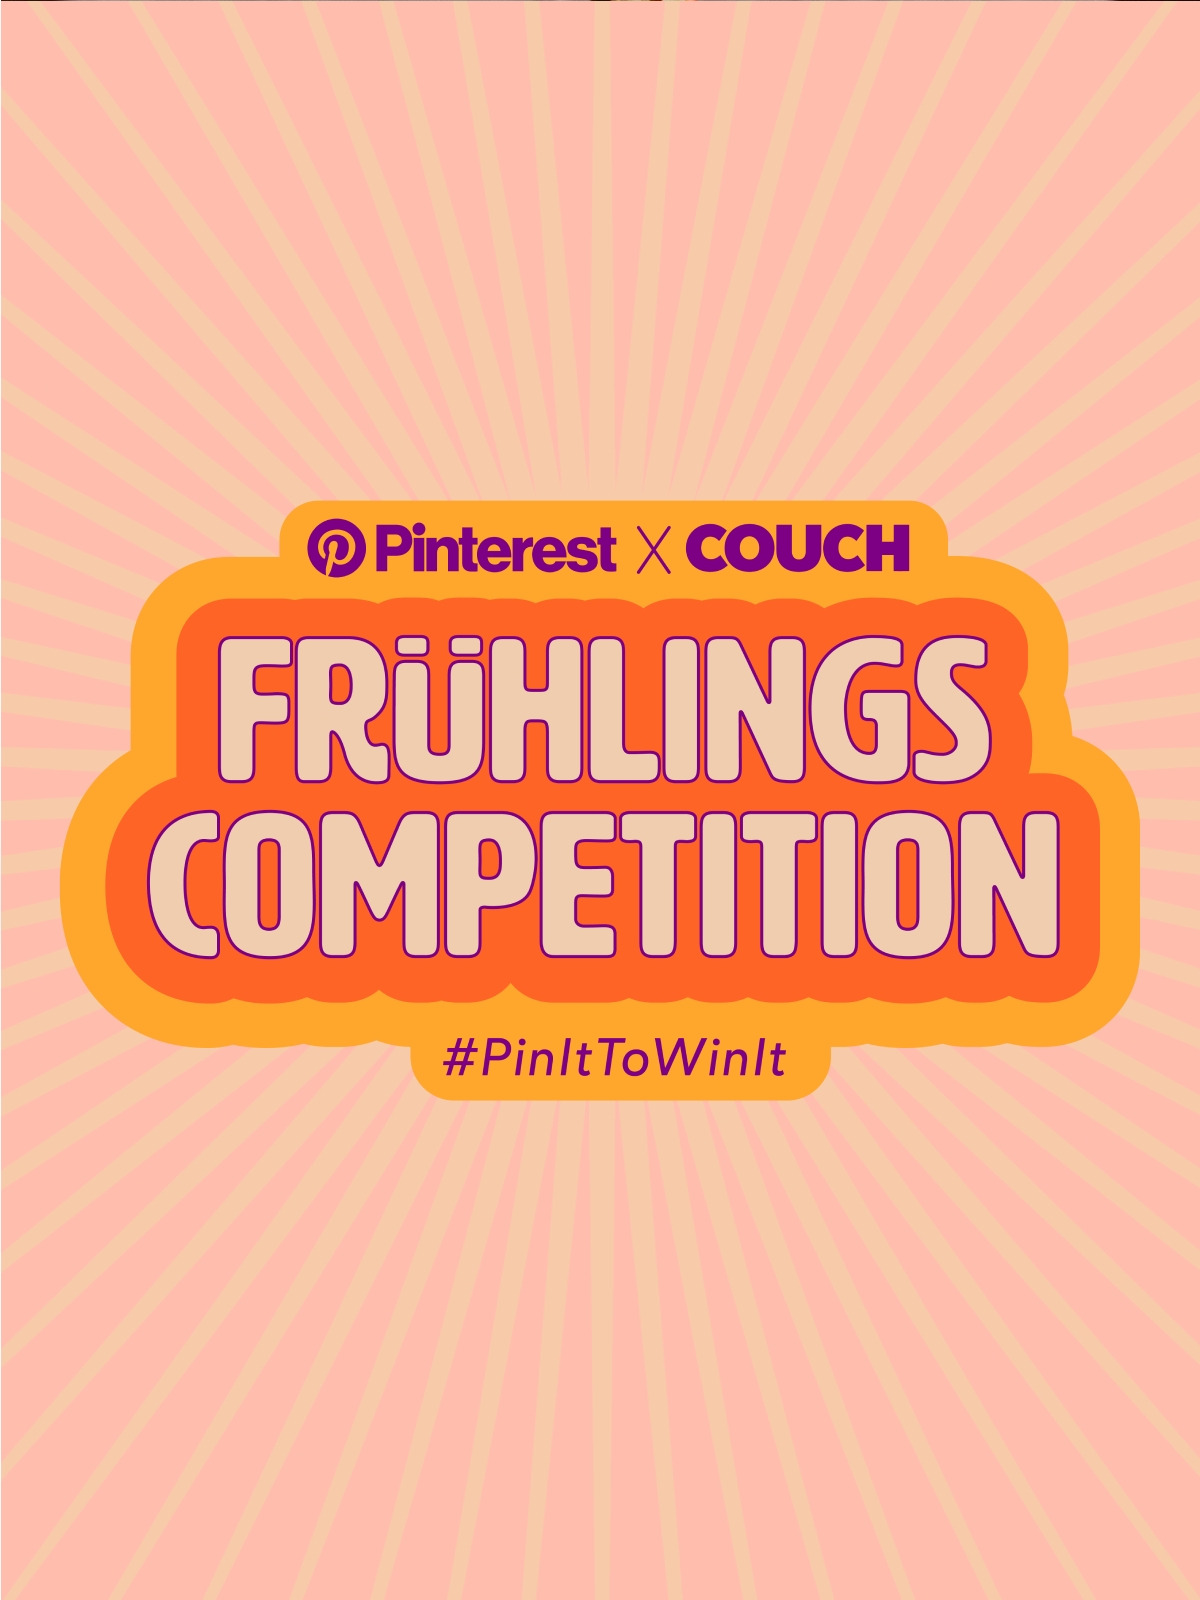 #PinItToWinIt 📌 Mach mit bei der Pinterest x COUCH Frühlings- Competition!